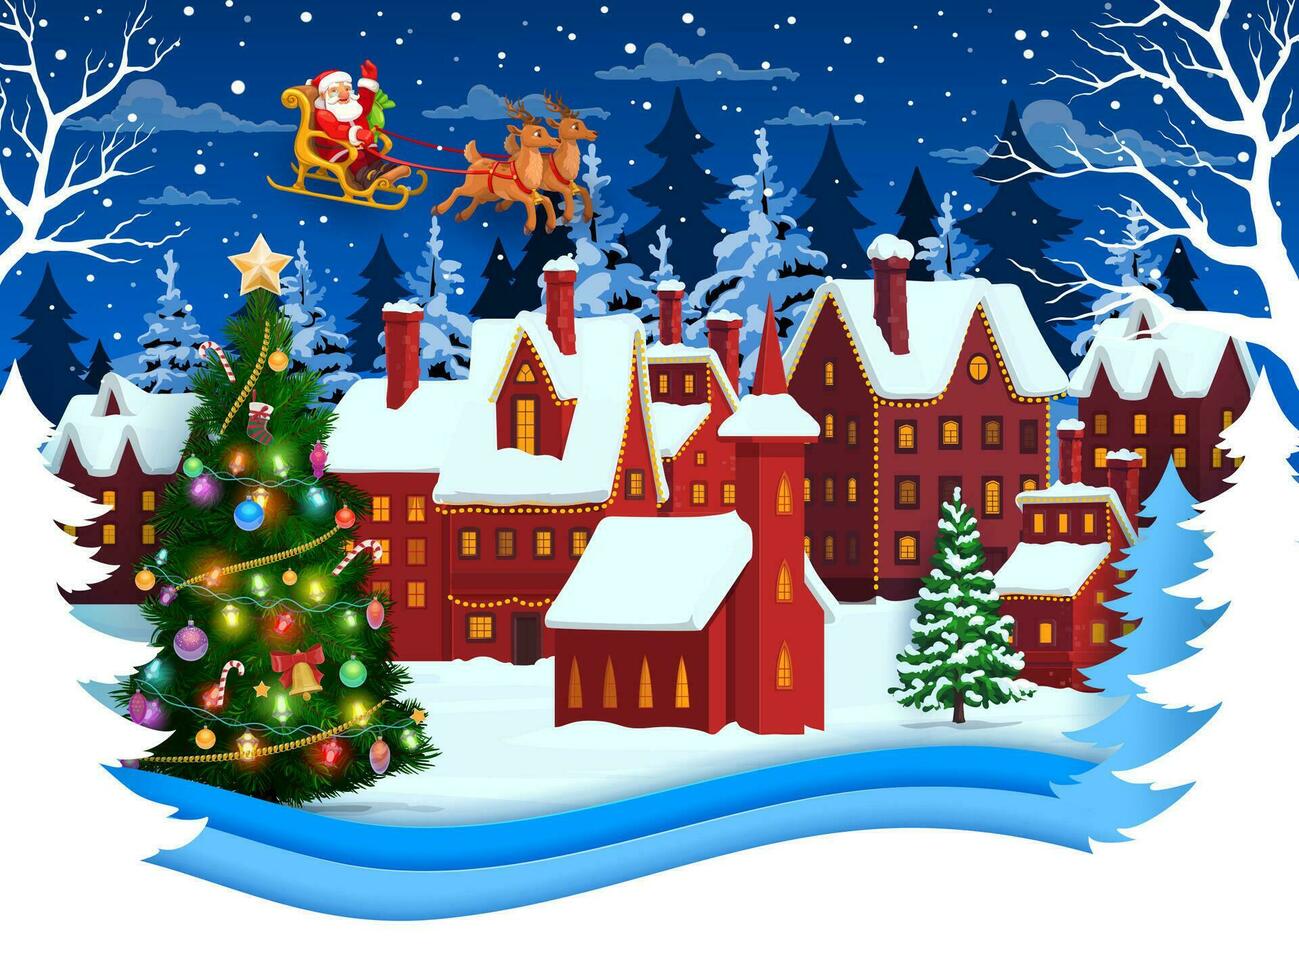 Christmas papercut winter town and Santa on sleigh vector